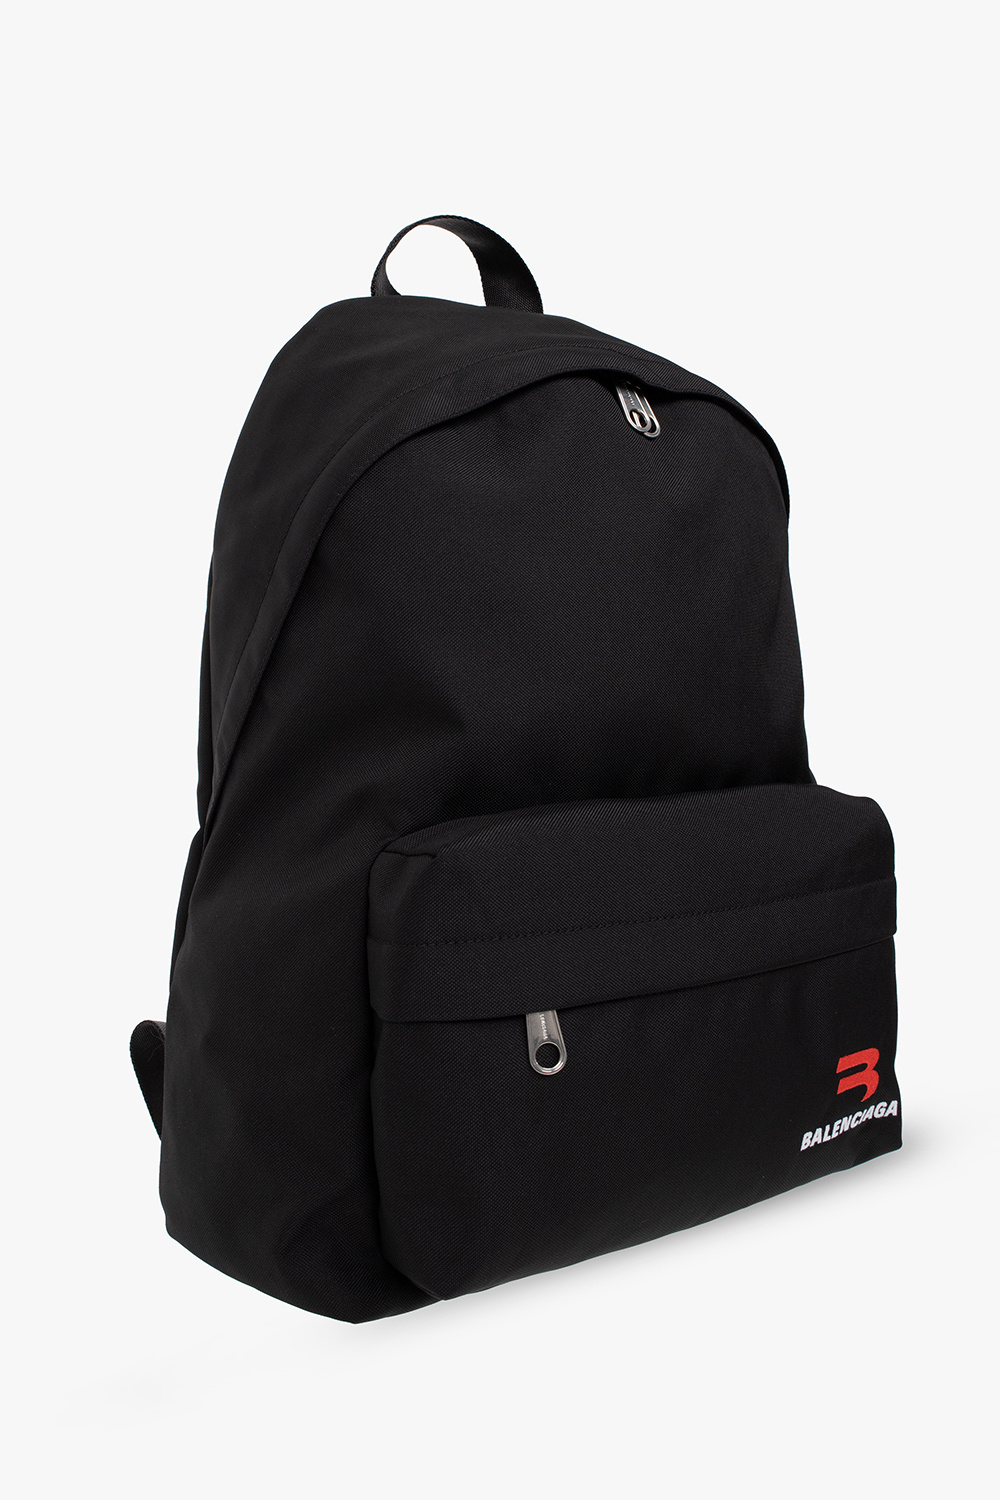 Balenciaga FURLA backpack with logo